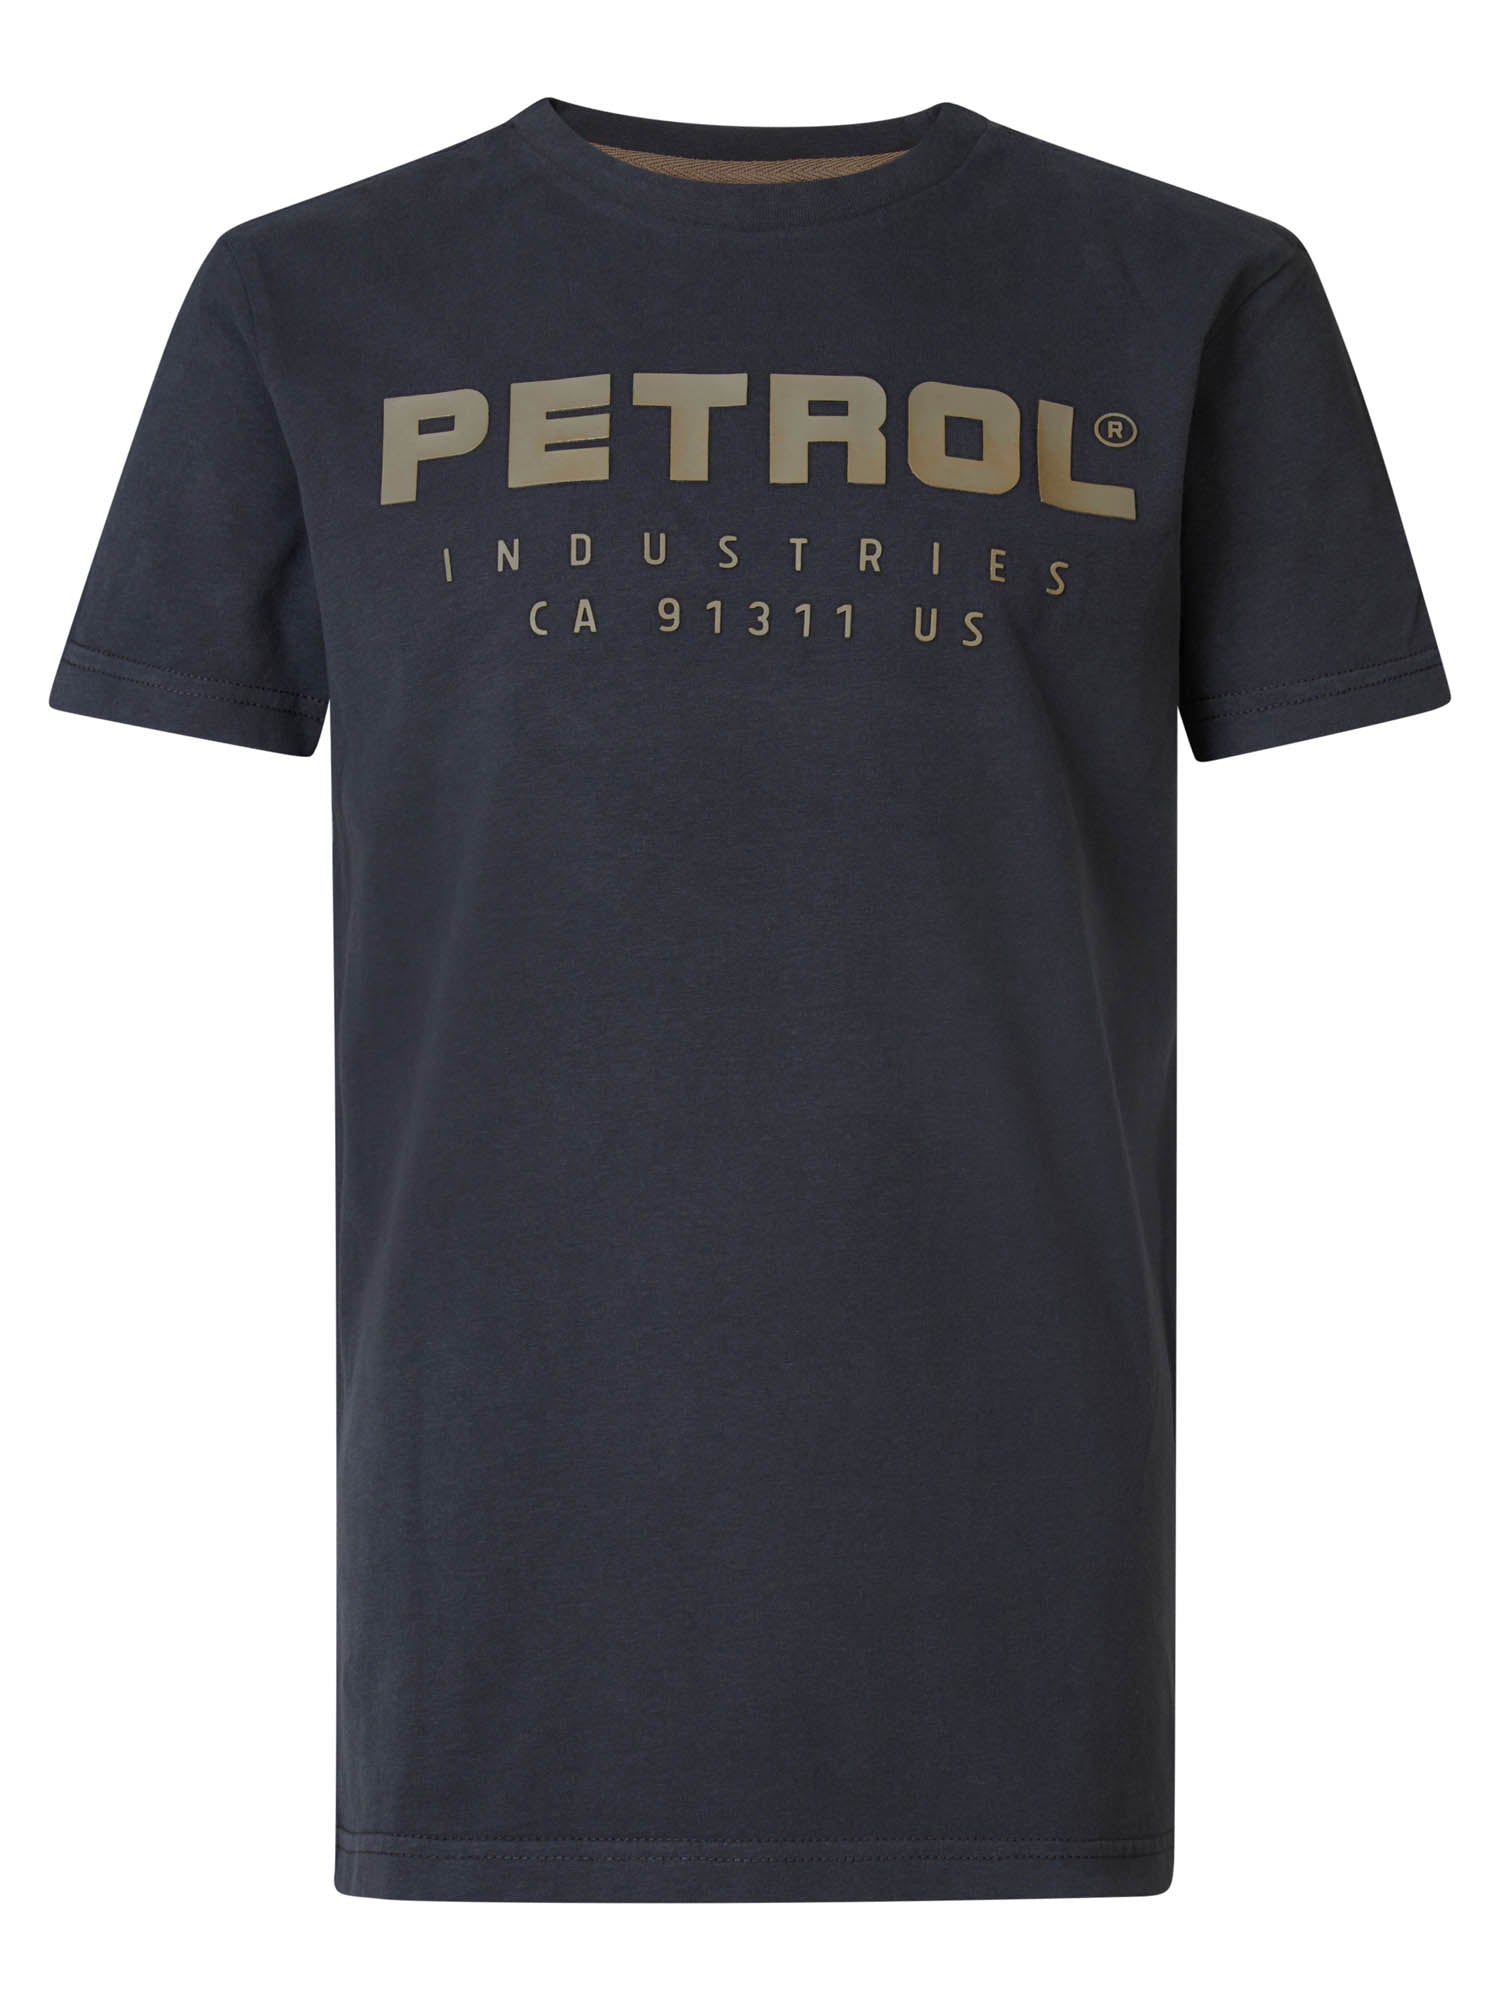 Petrol Industries Logo Artwork T-shirt Black Sand - 128